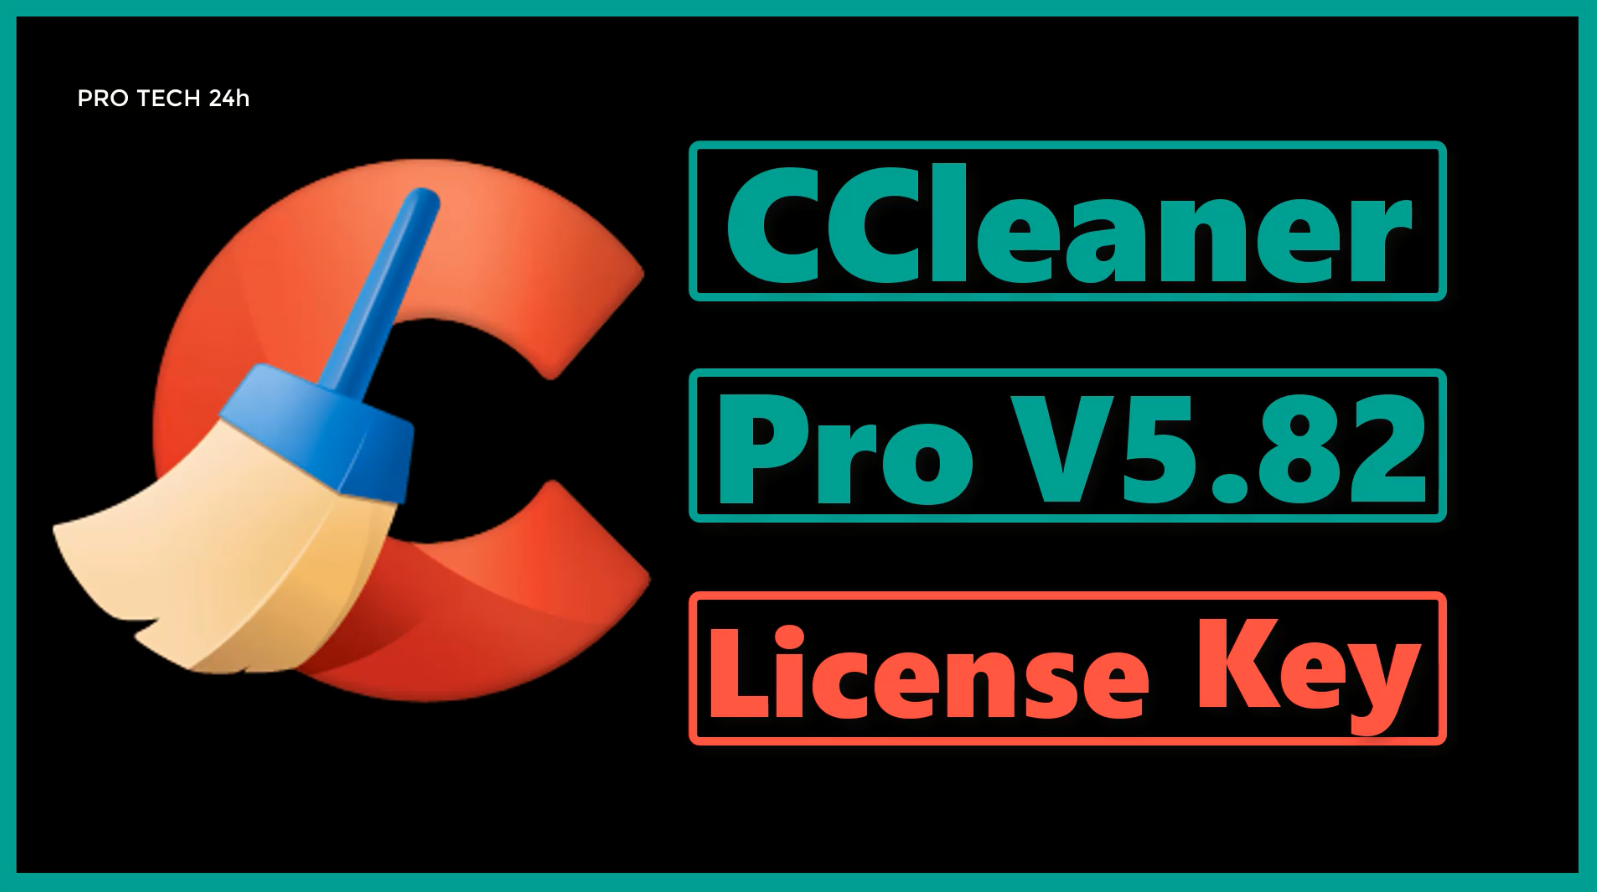 Key clean. CCLEANER professional Key. CCLEANER Pro License Key. CCLEANER Key 2022. CCLEANER Pro License Key name.